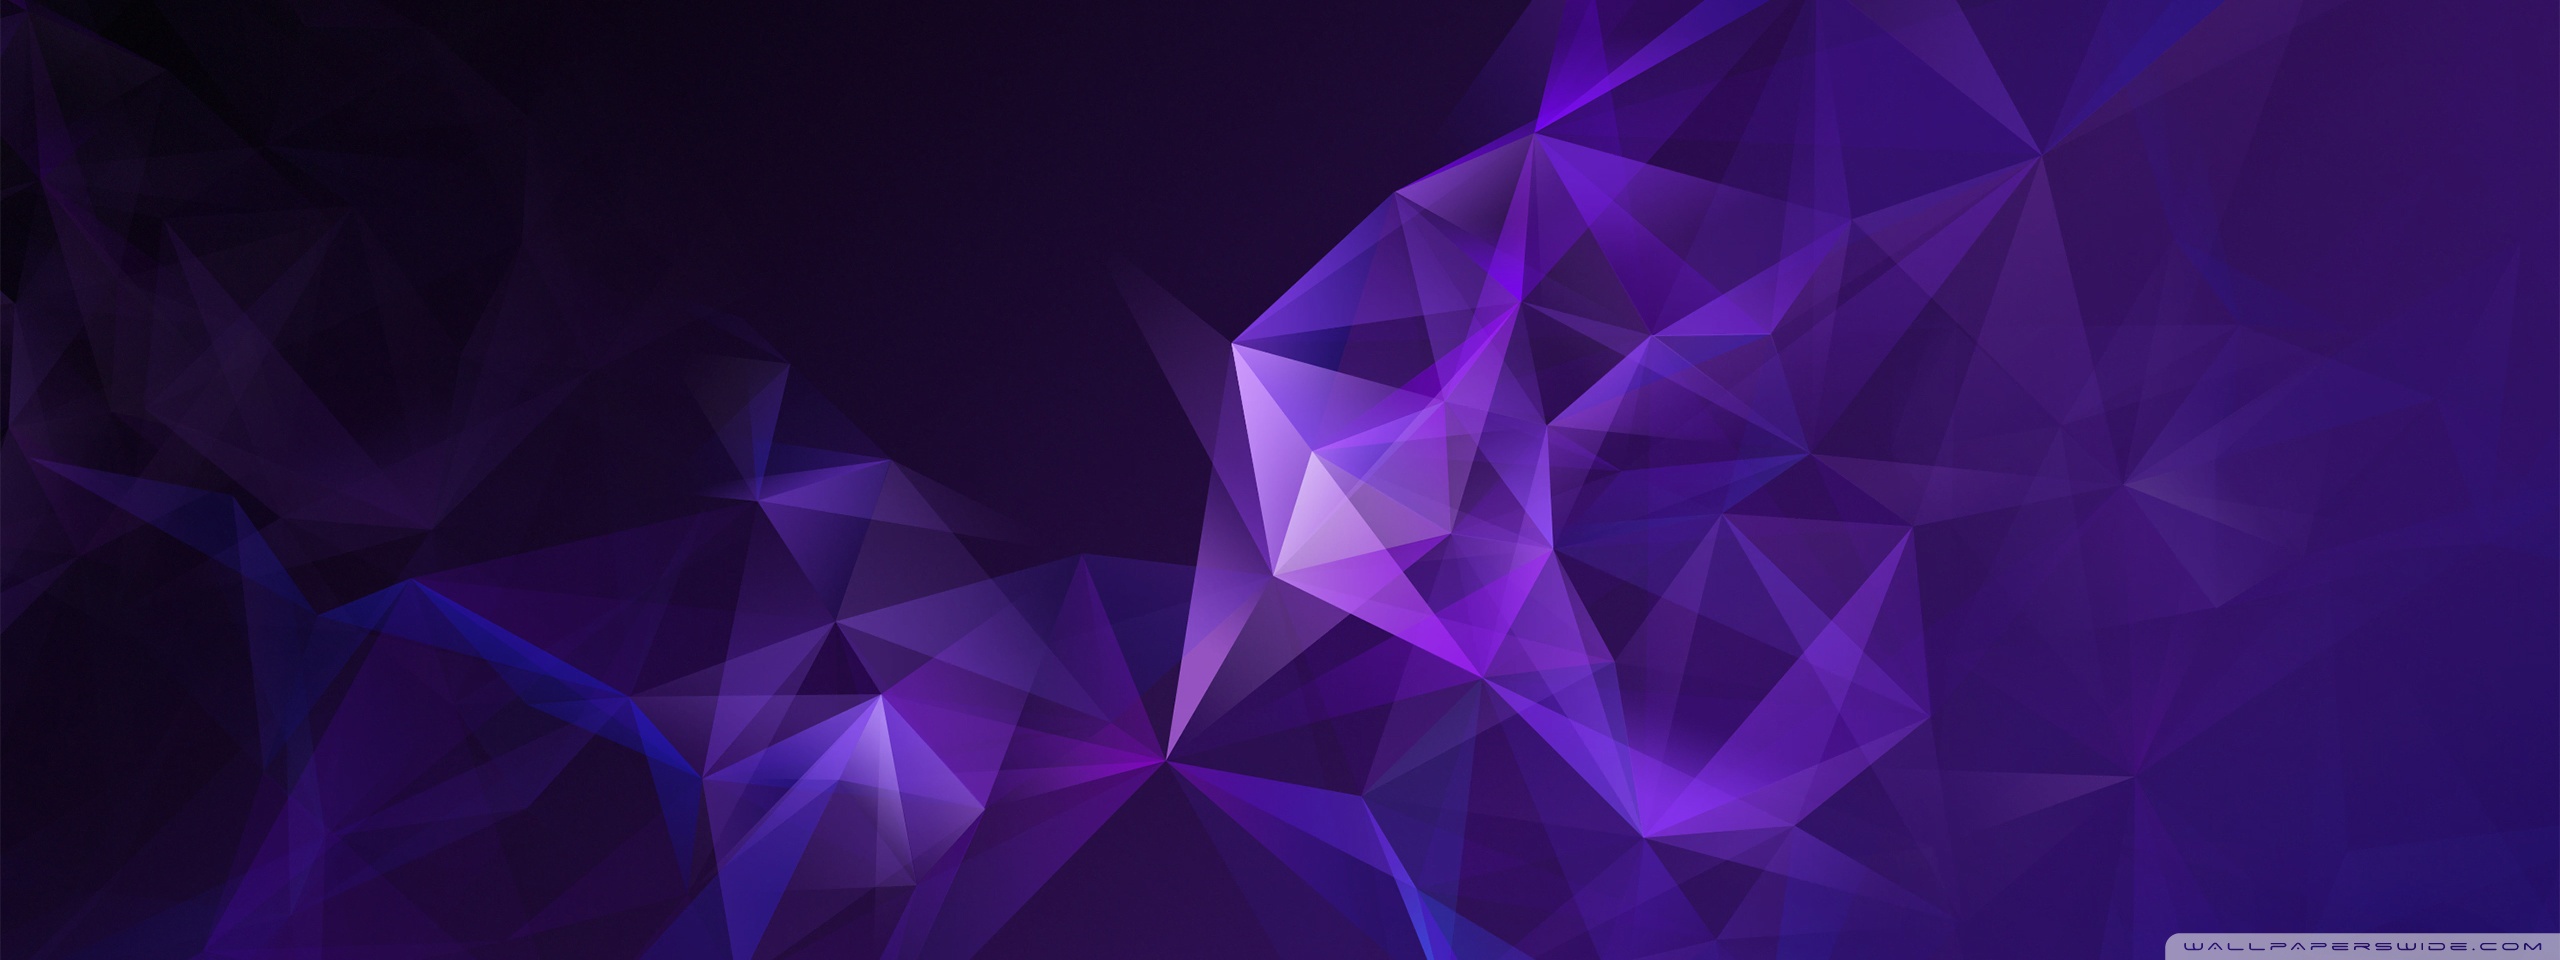 Low Poly Purple Abstract Art Ultra HD Desktop Background Wallpaper for: Widescreen & UltraWide Desktop & Laptop, Multi Display, Dual Monitor, Tablet